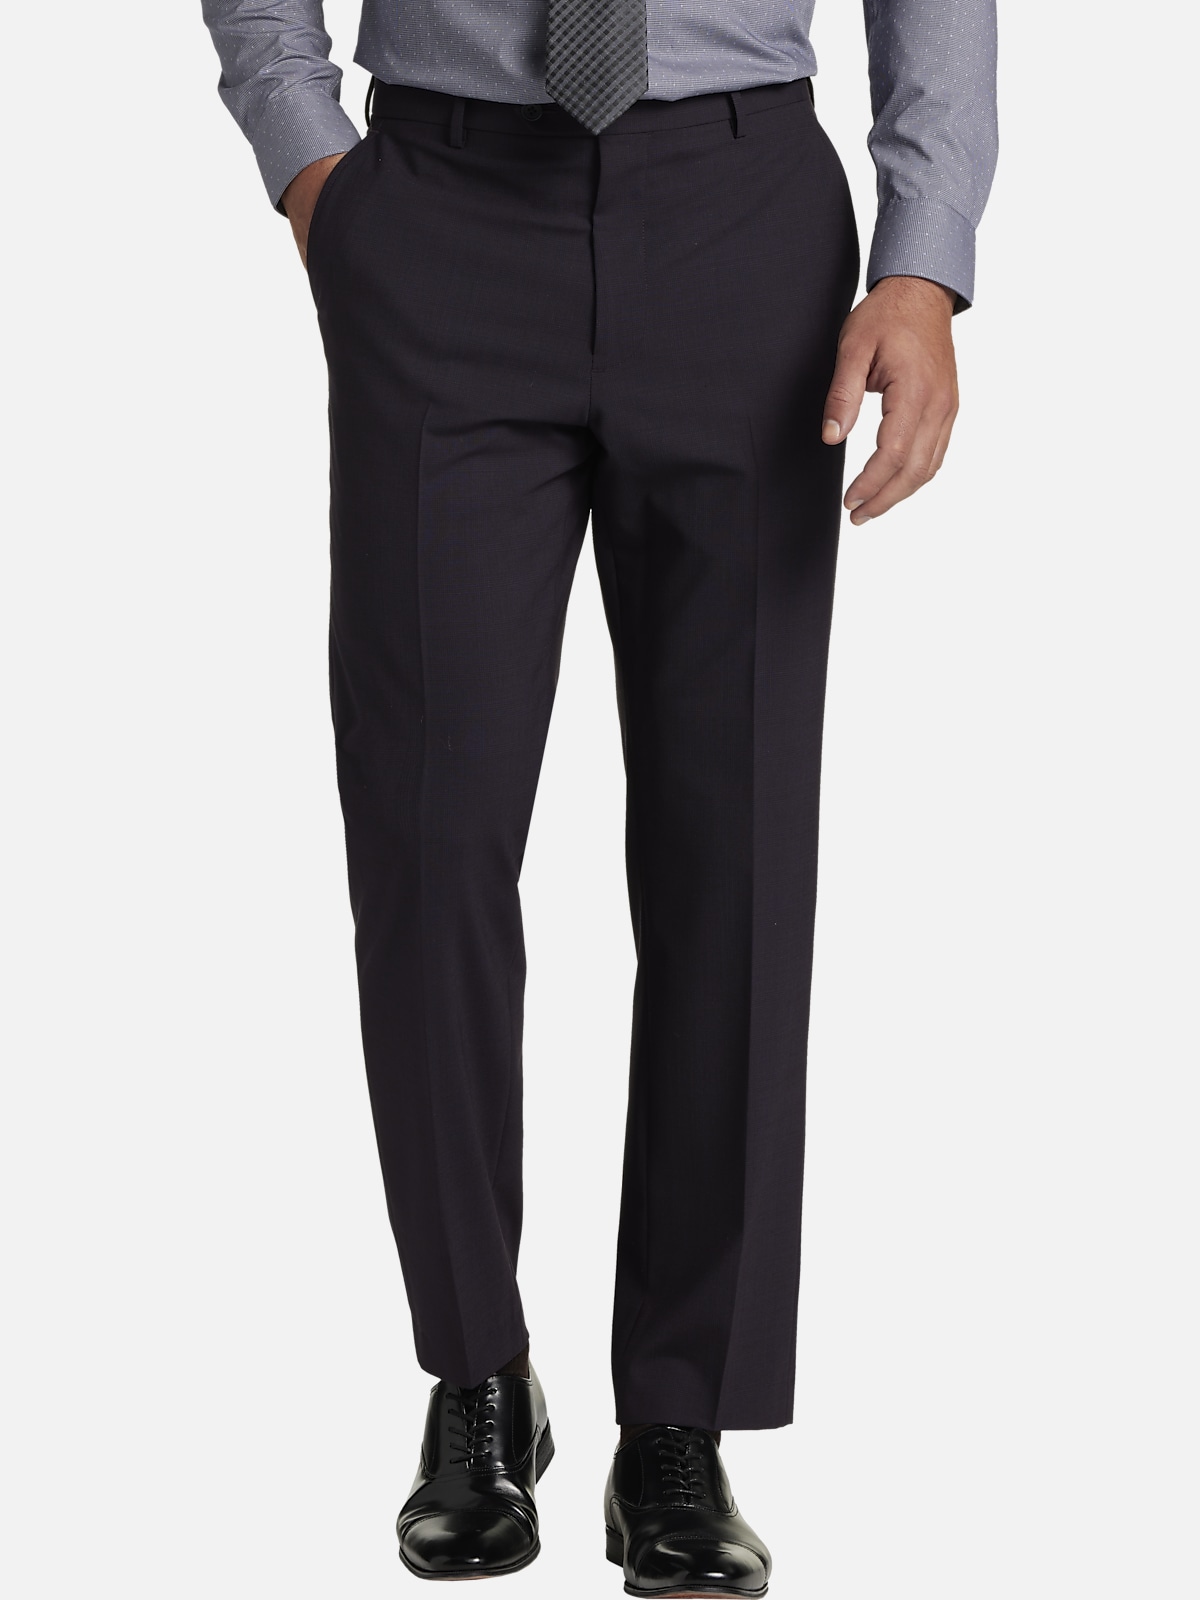 Awearness Kenneth Cole Modern Fit Suit Separates Pants | Pants| Men's ...